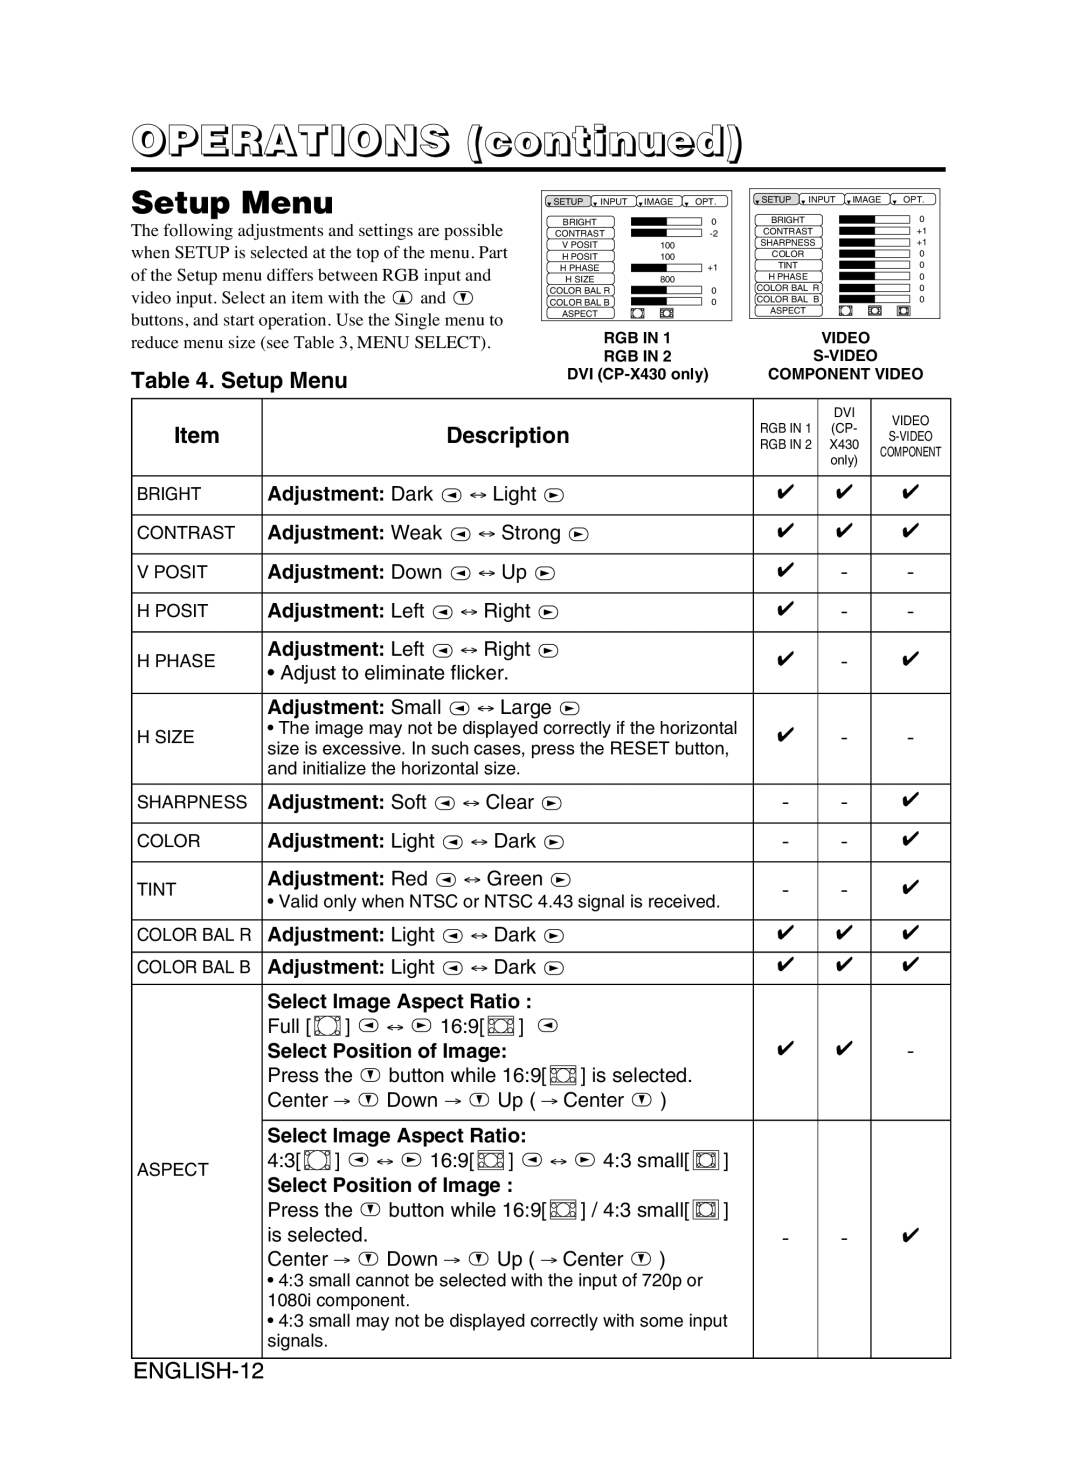 Dukane 8053 user manual Setup Menu, OPERATIONS continued, Description, ENGLISH-12 